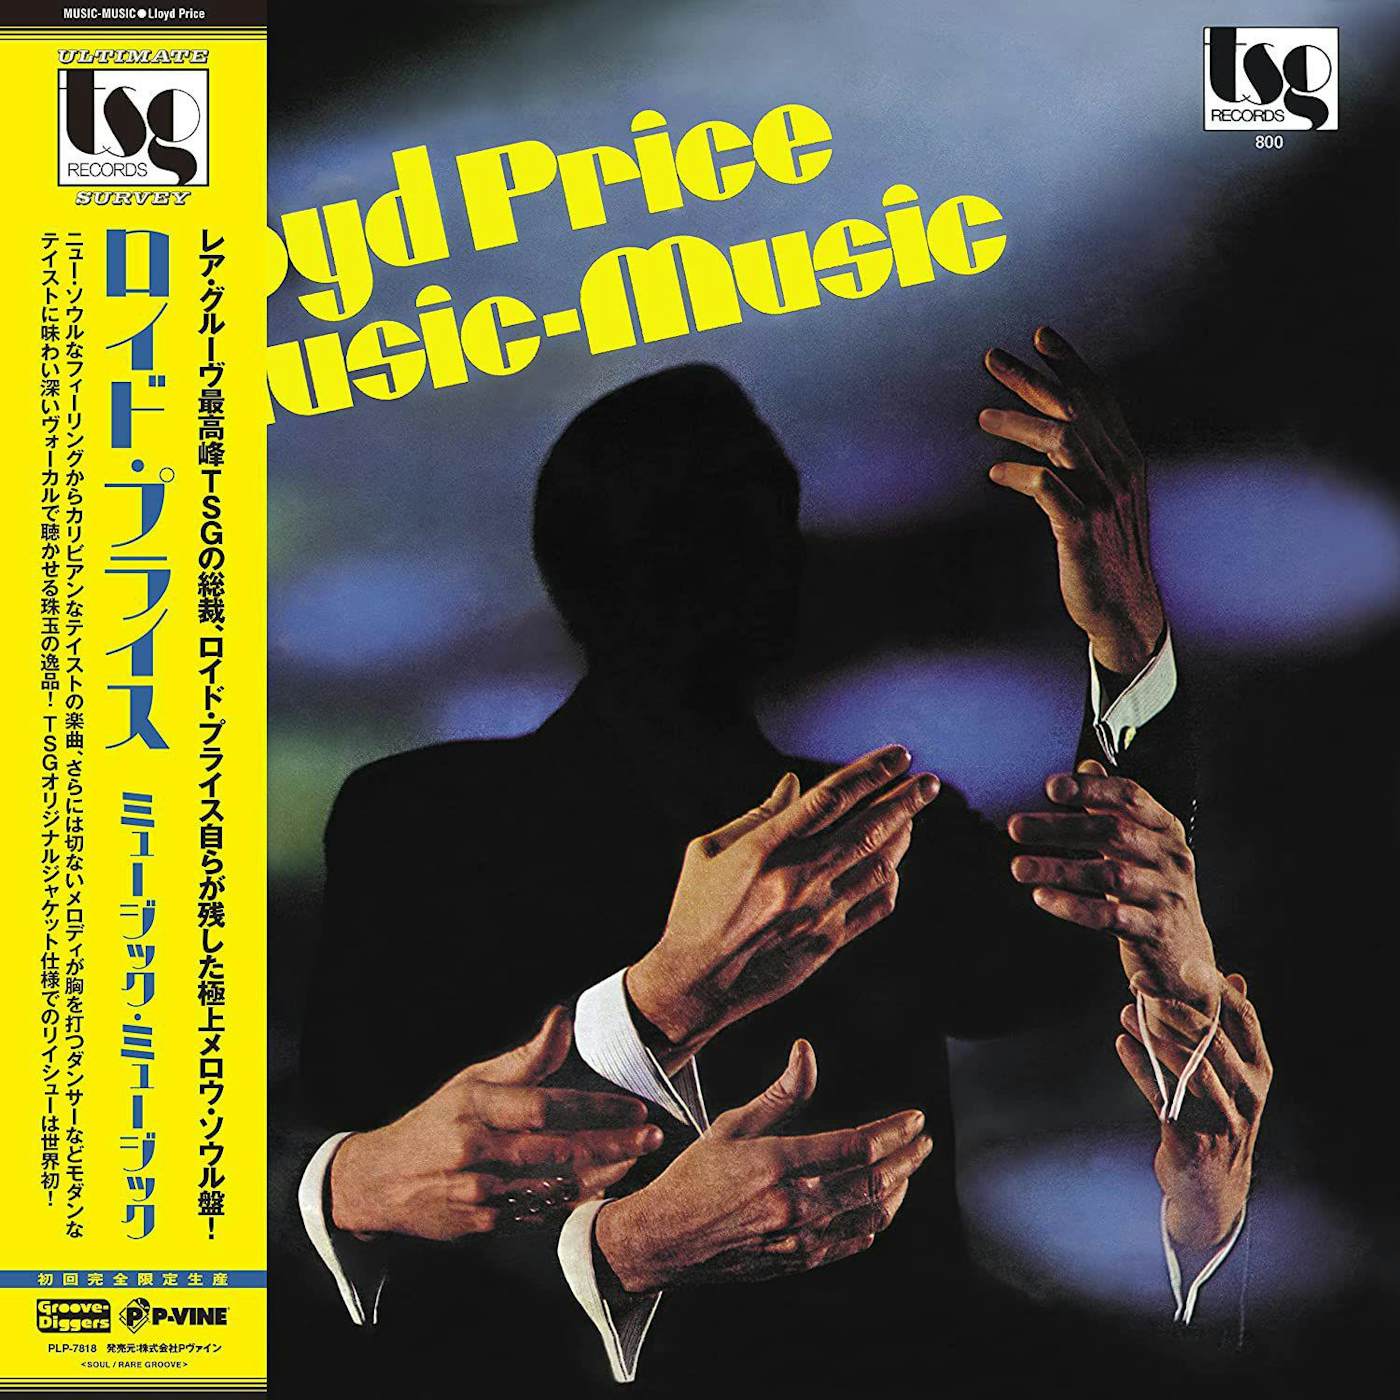 Lloyd Price Music - Music Vinyl Record